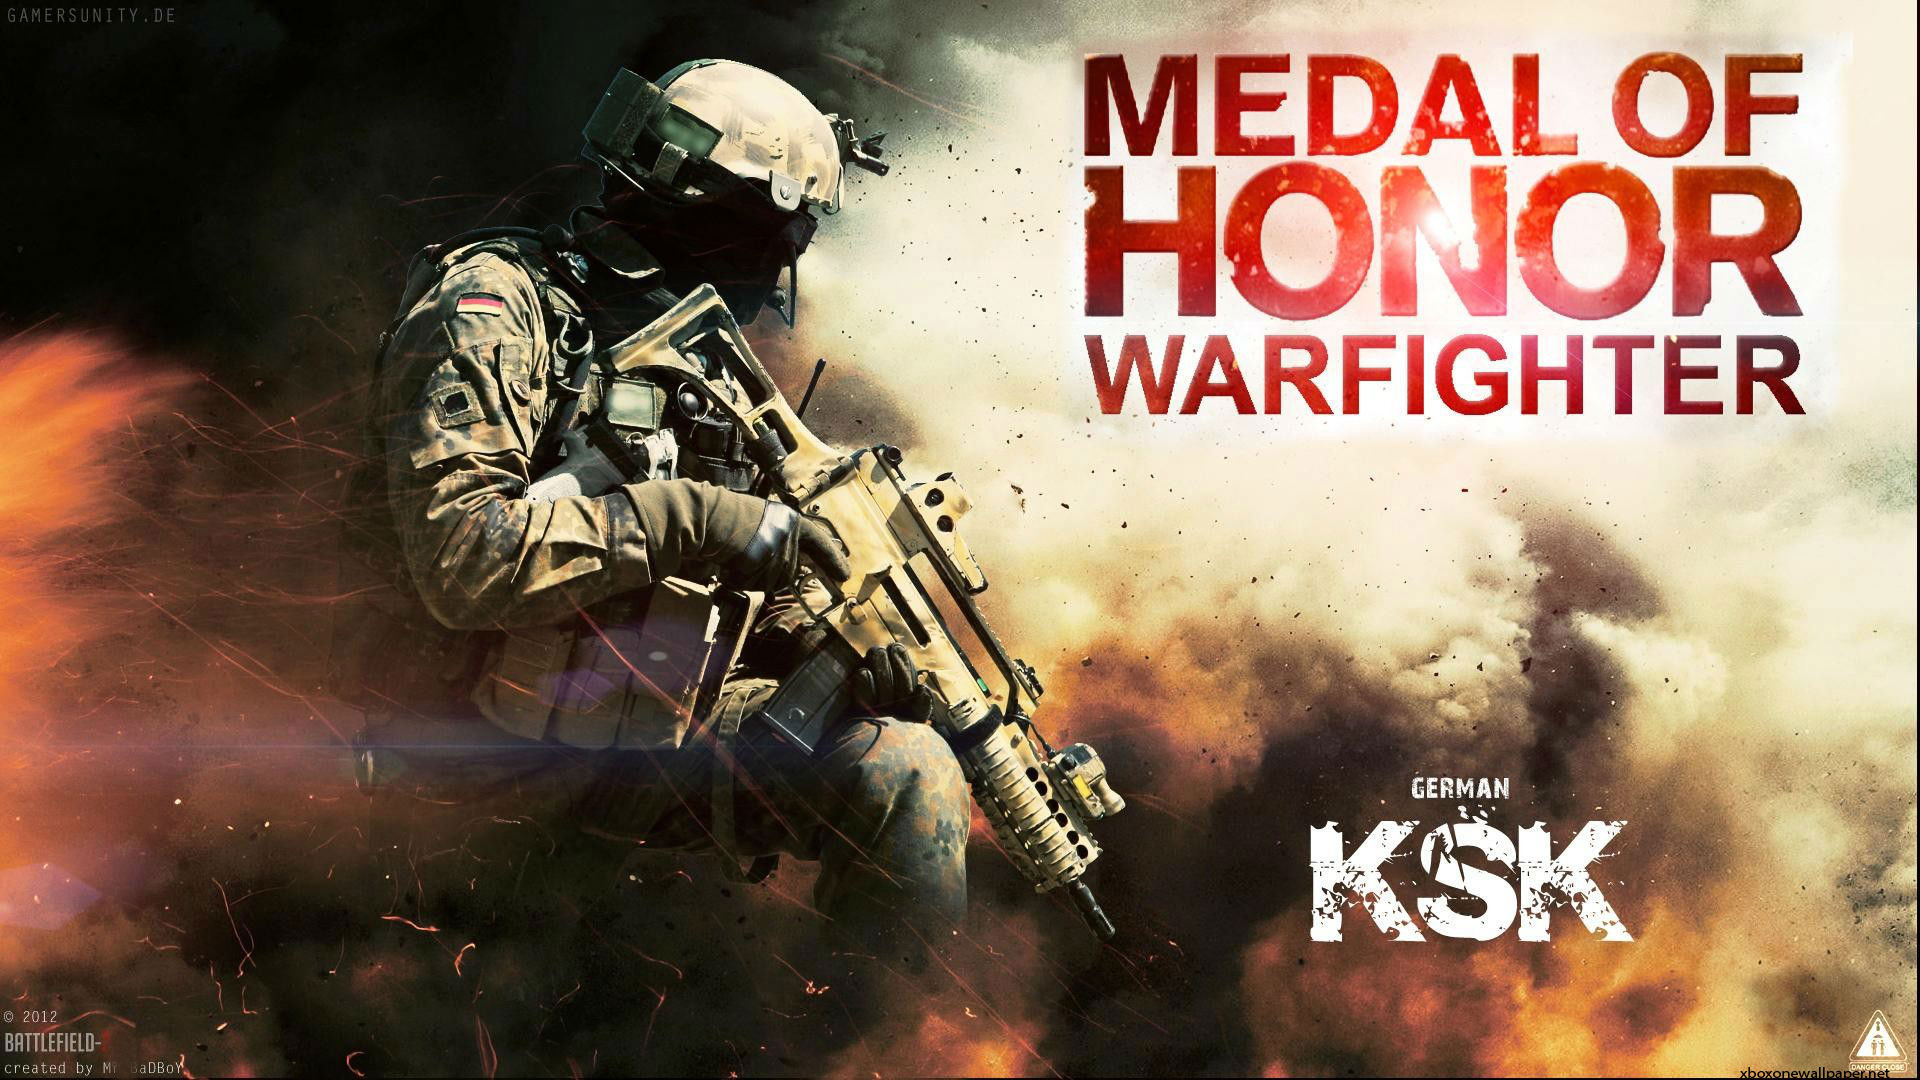 38+] Xbox Medal of Honor Warfighter HD Wallpaper - WallpaperSafari